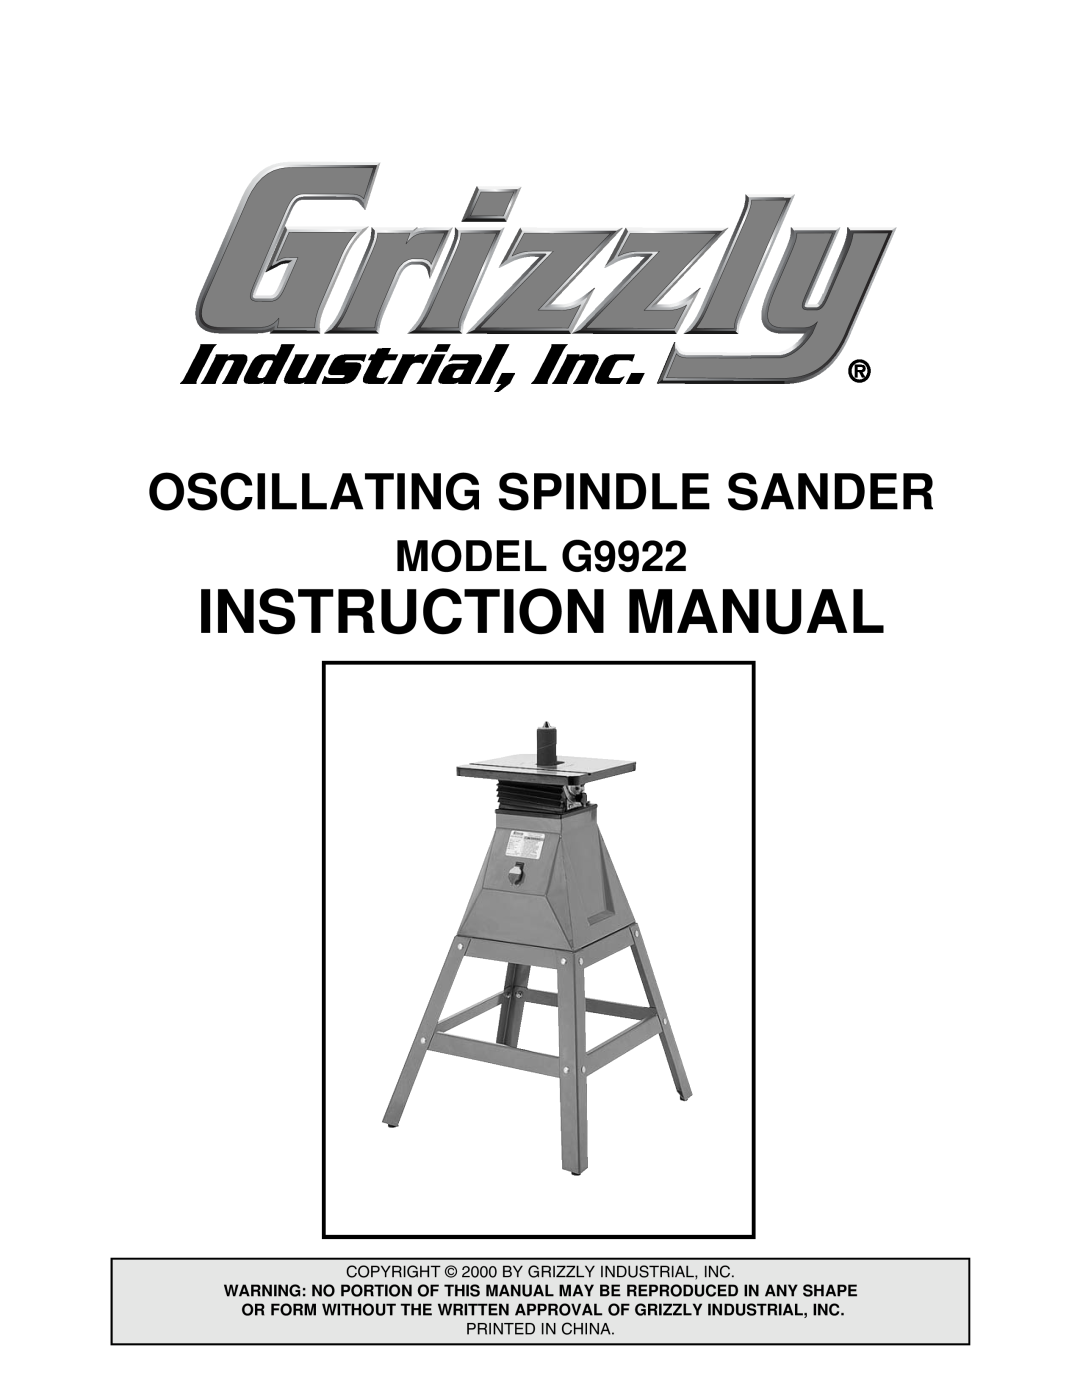 Grizzly instruction manual MODEL G9922, Oscillating Spindle Sander 